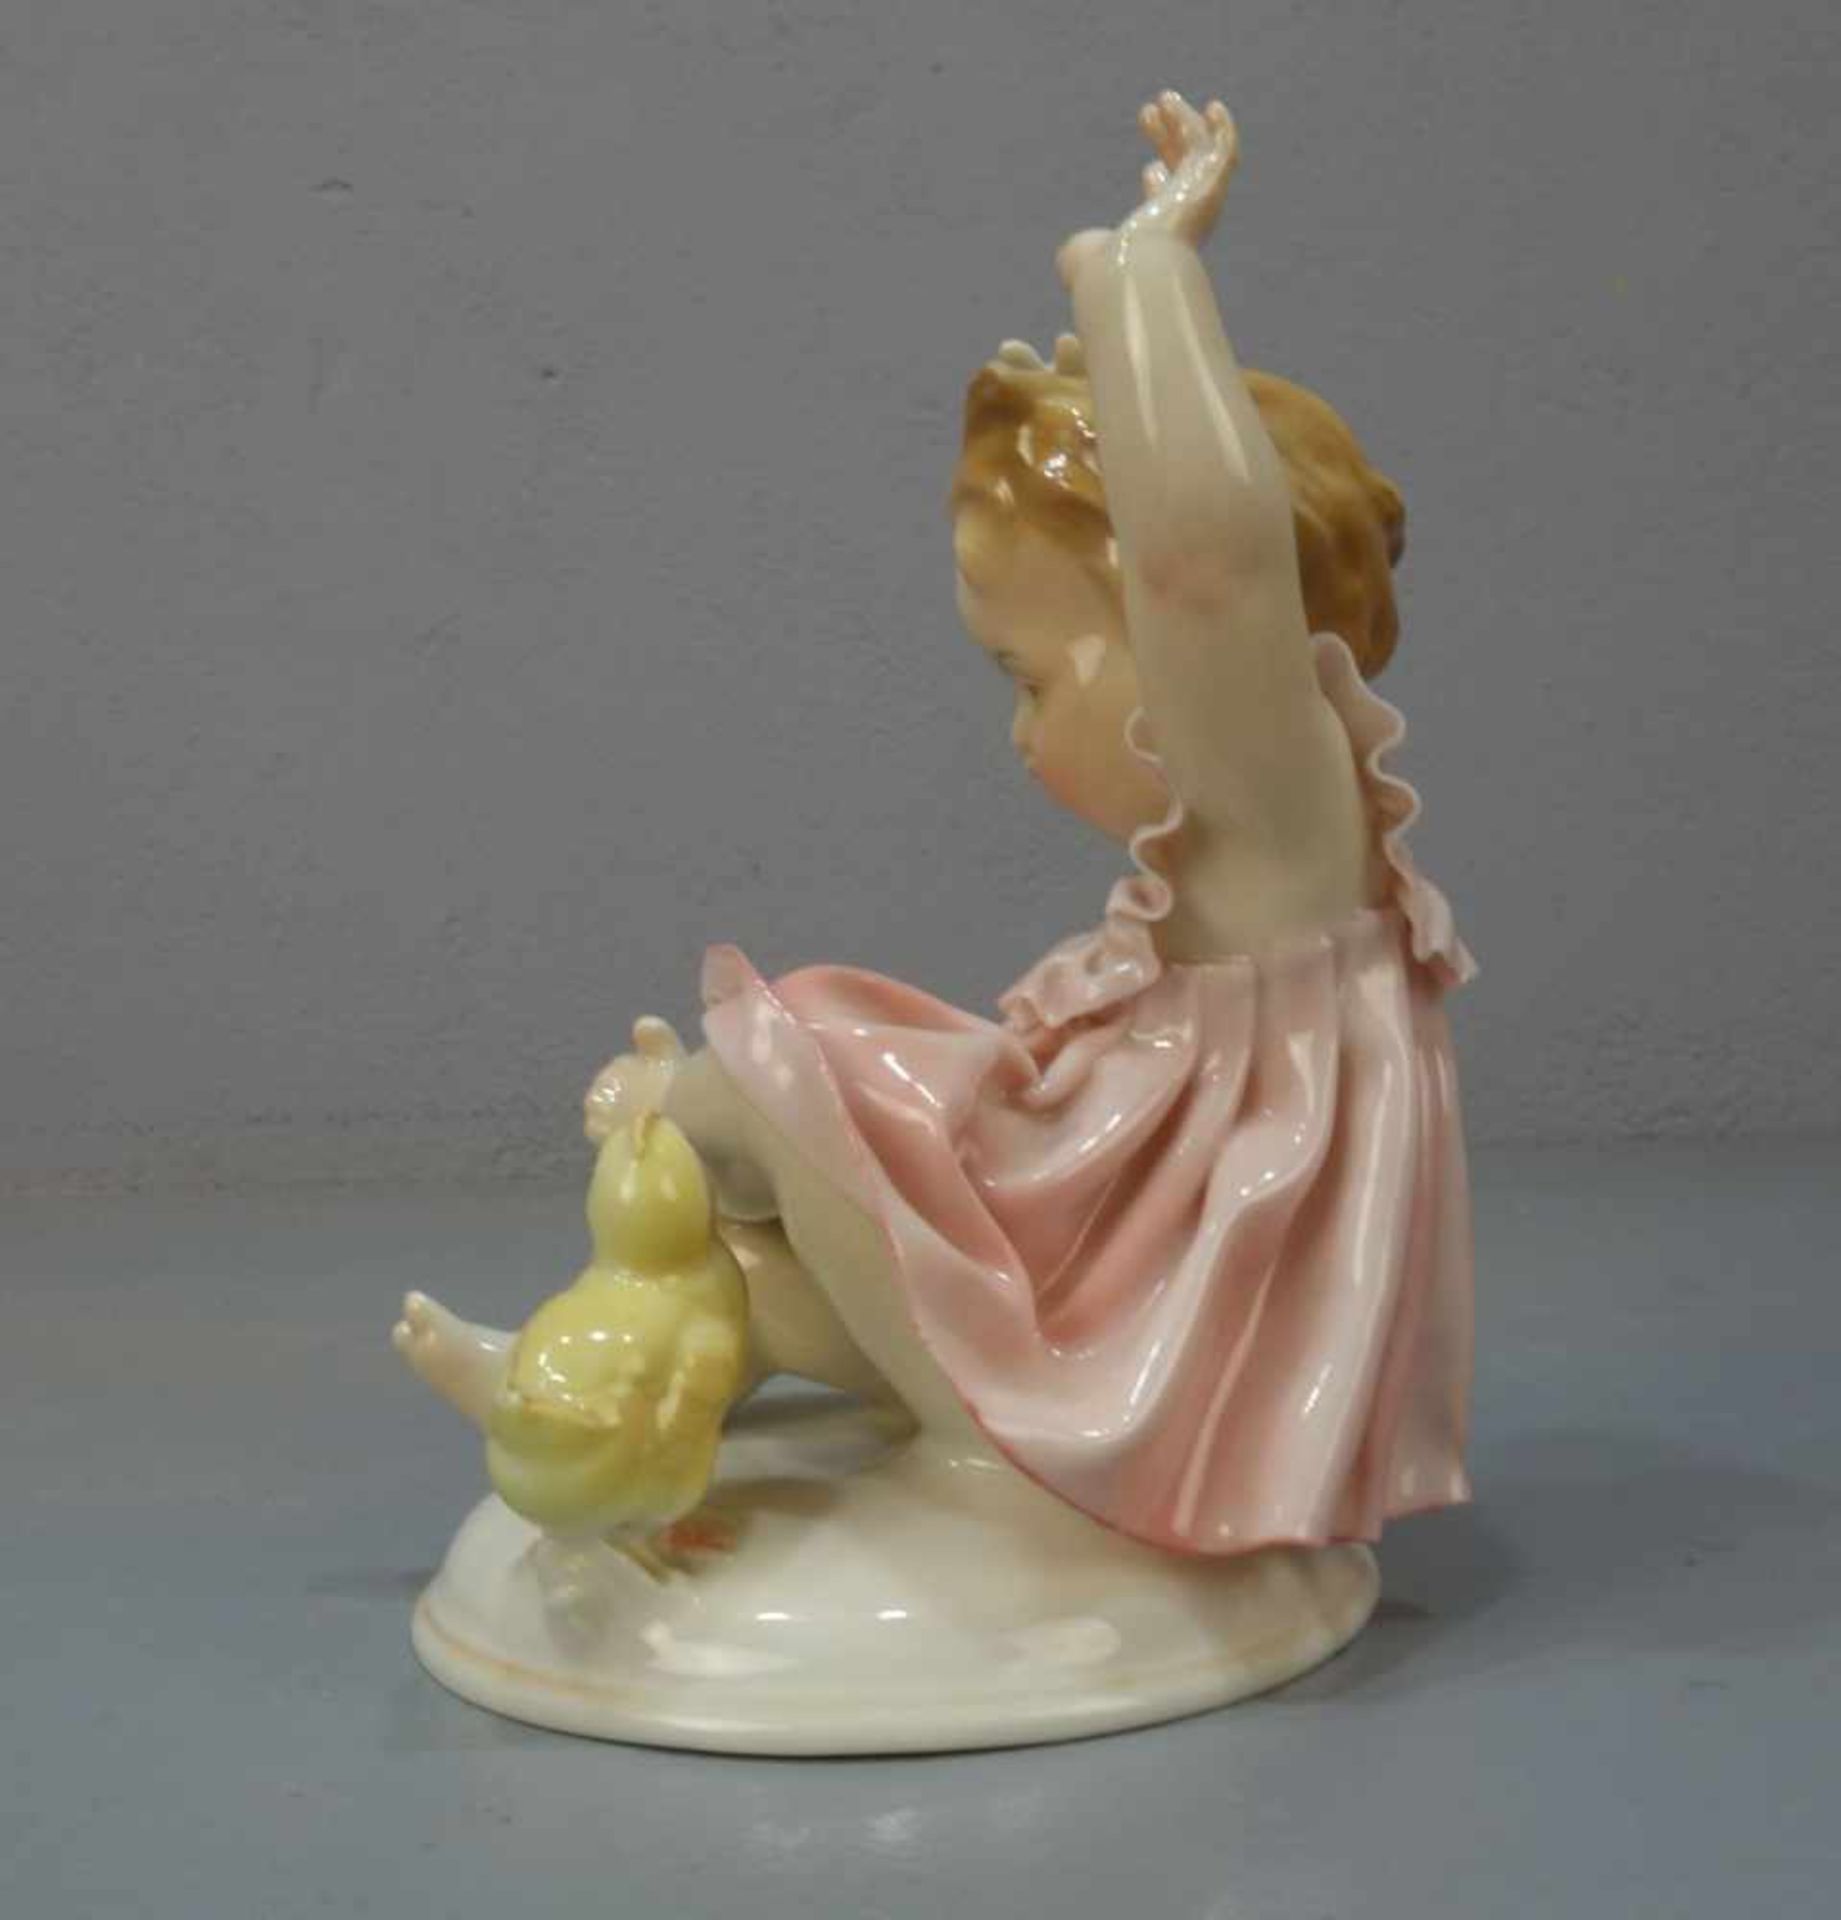 PORZELLANFIGUR: "Mädchen mit Küken" / porcelain figure "girl with chicklet", 1. Hälfte 20. Jh., - Bild 3 aus 6